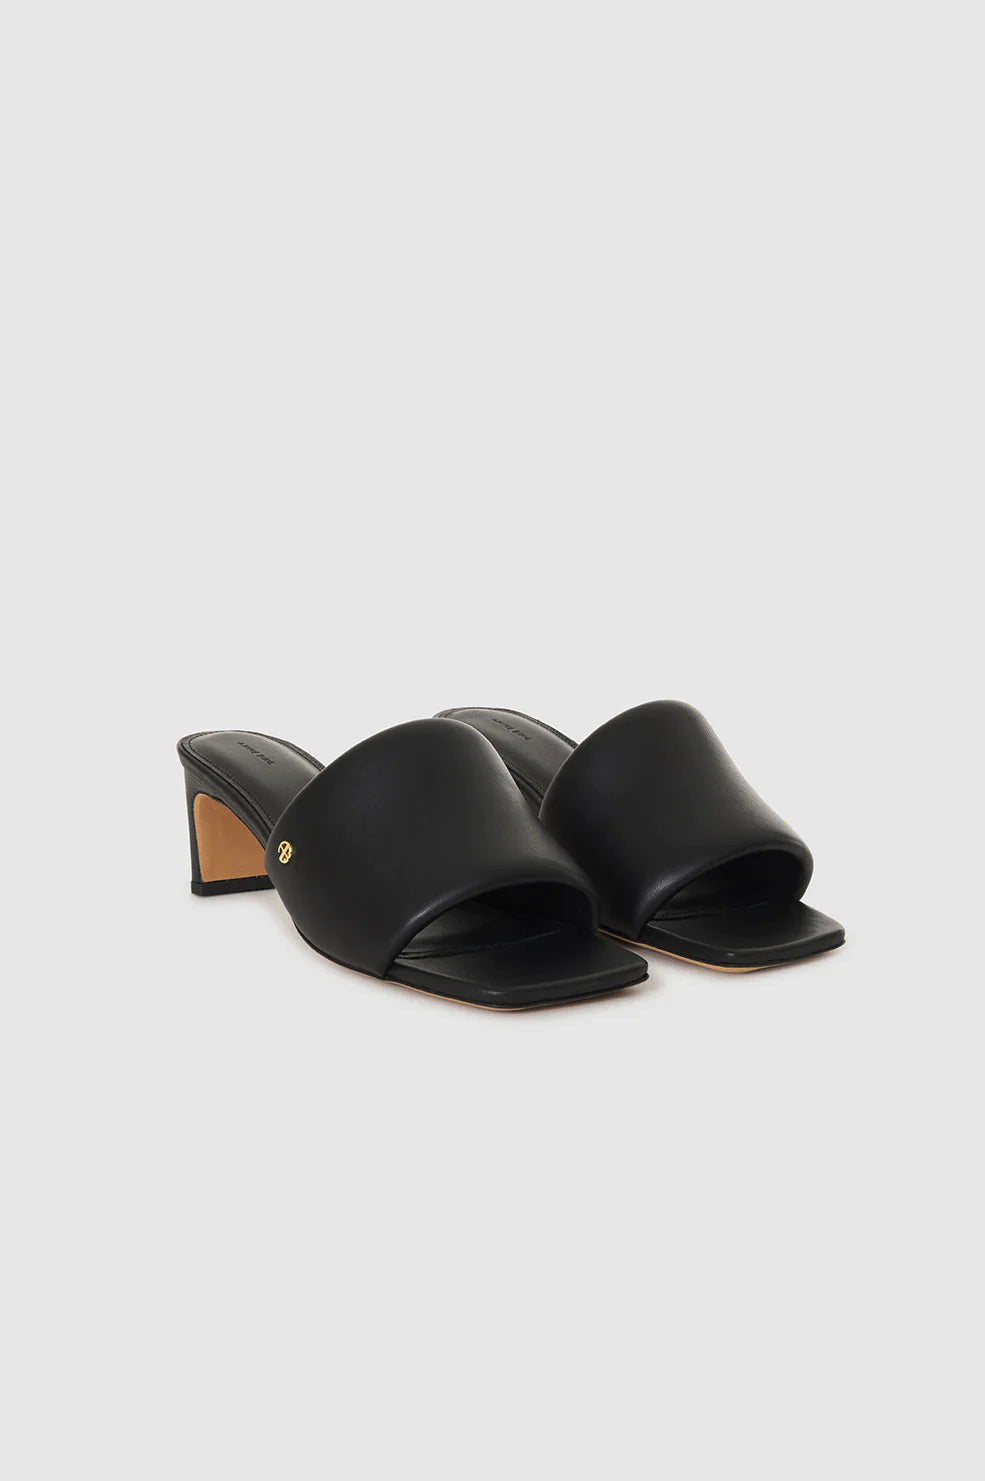 Skyler Sandals in Black